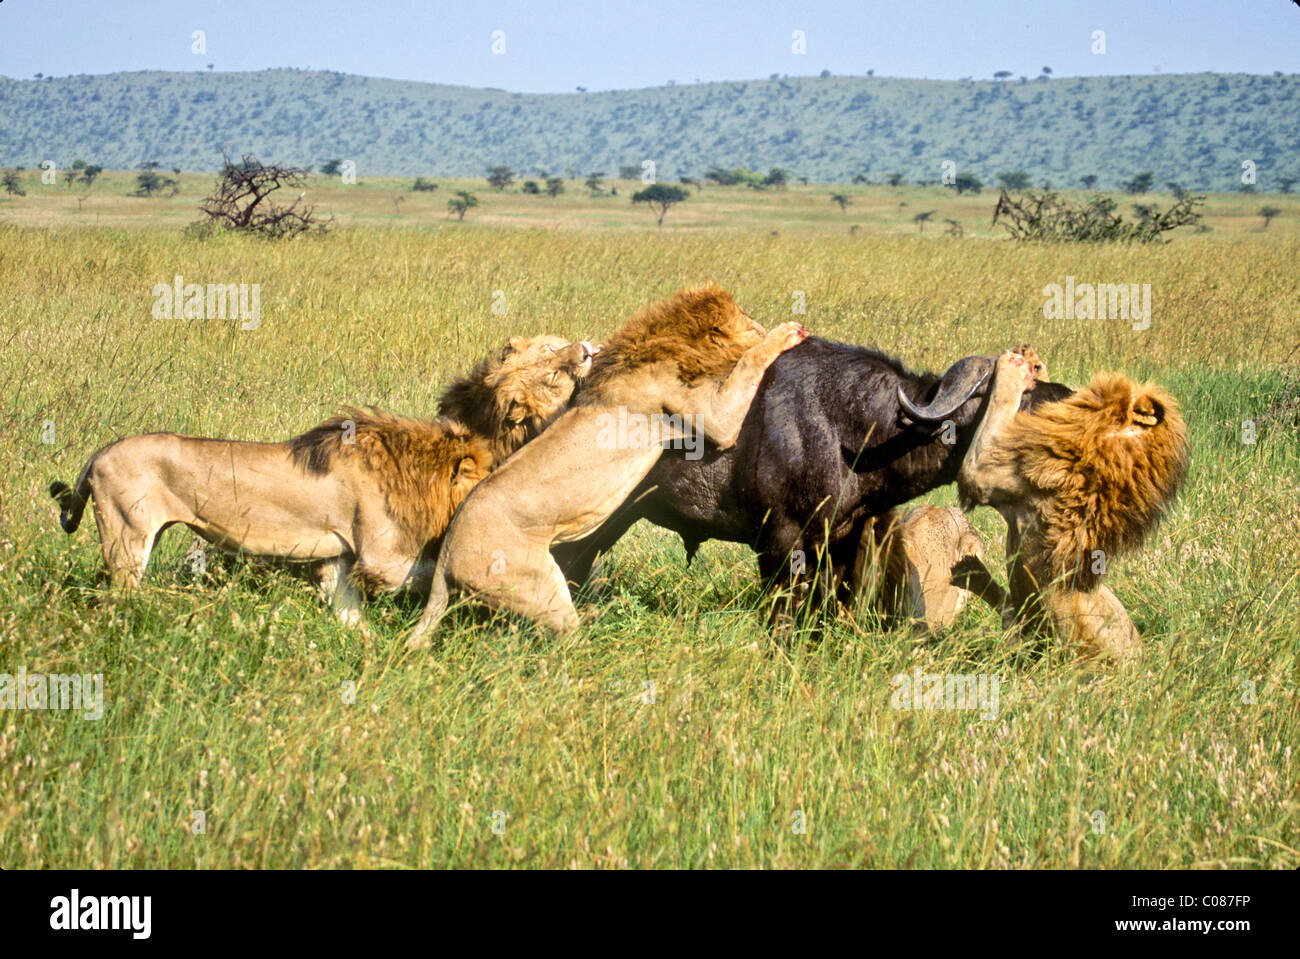 Lions attacking buffalo, Masai Mara, Kenya Stock Photo